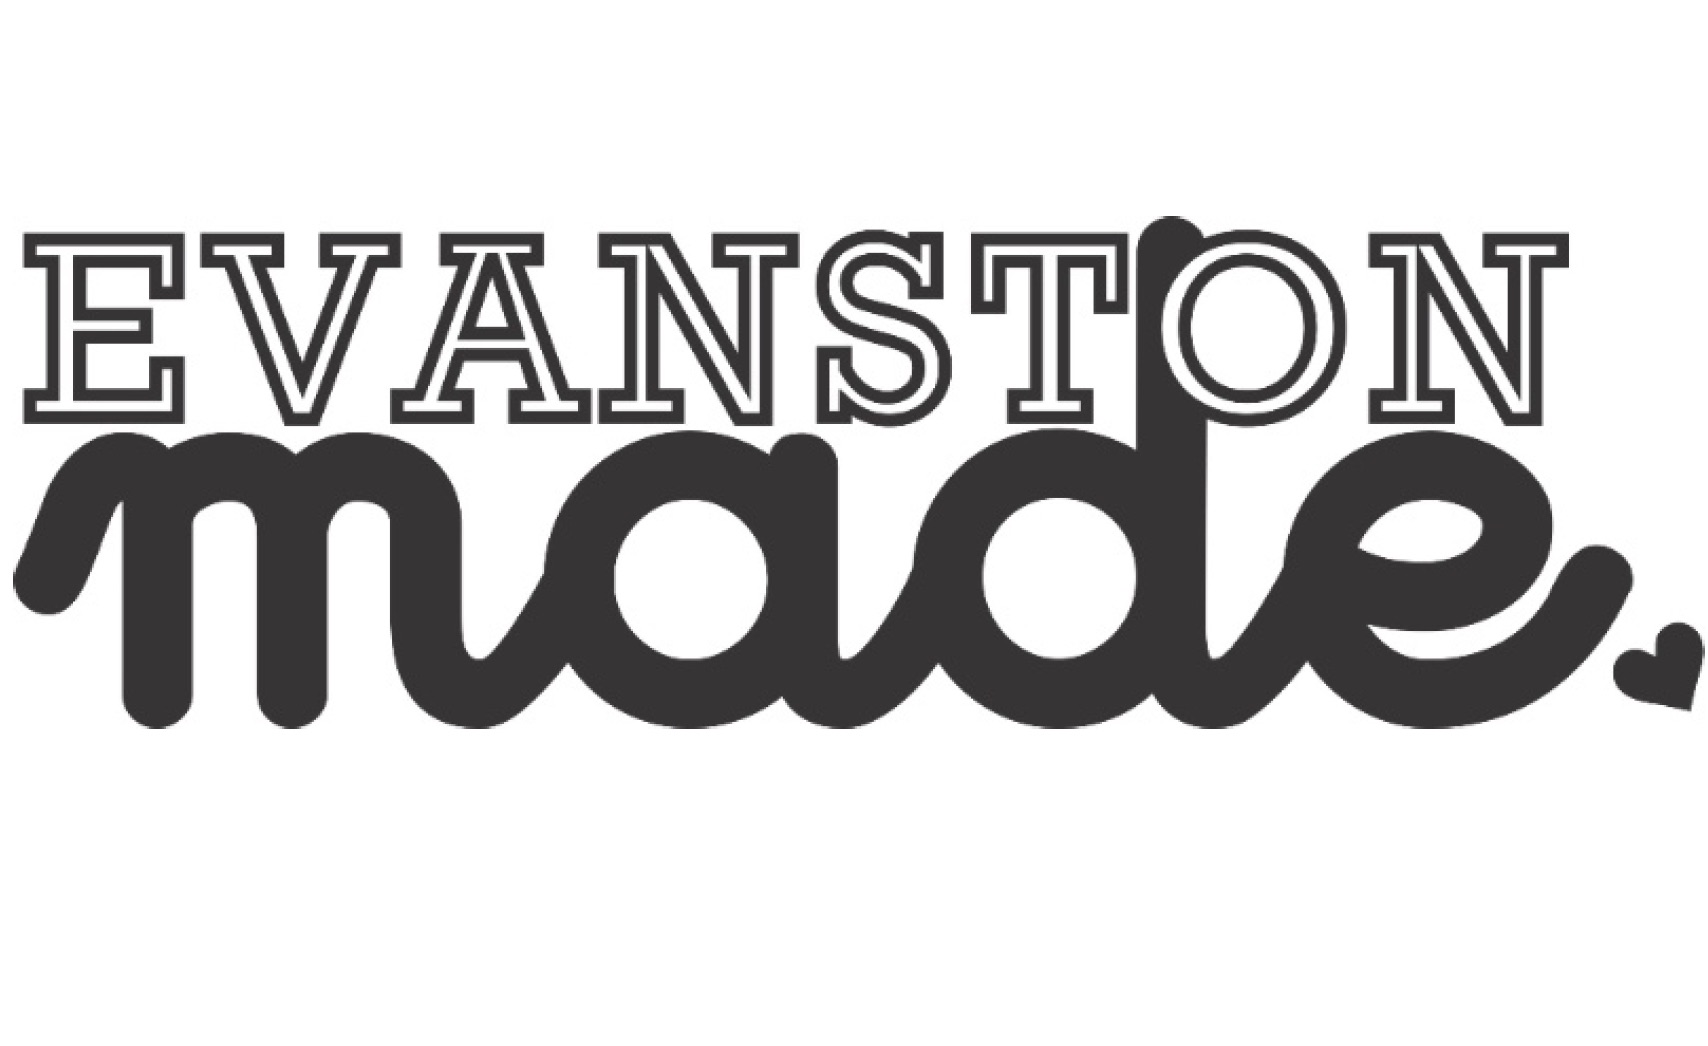 Evanston Made Logo